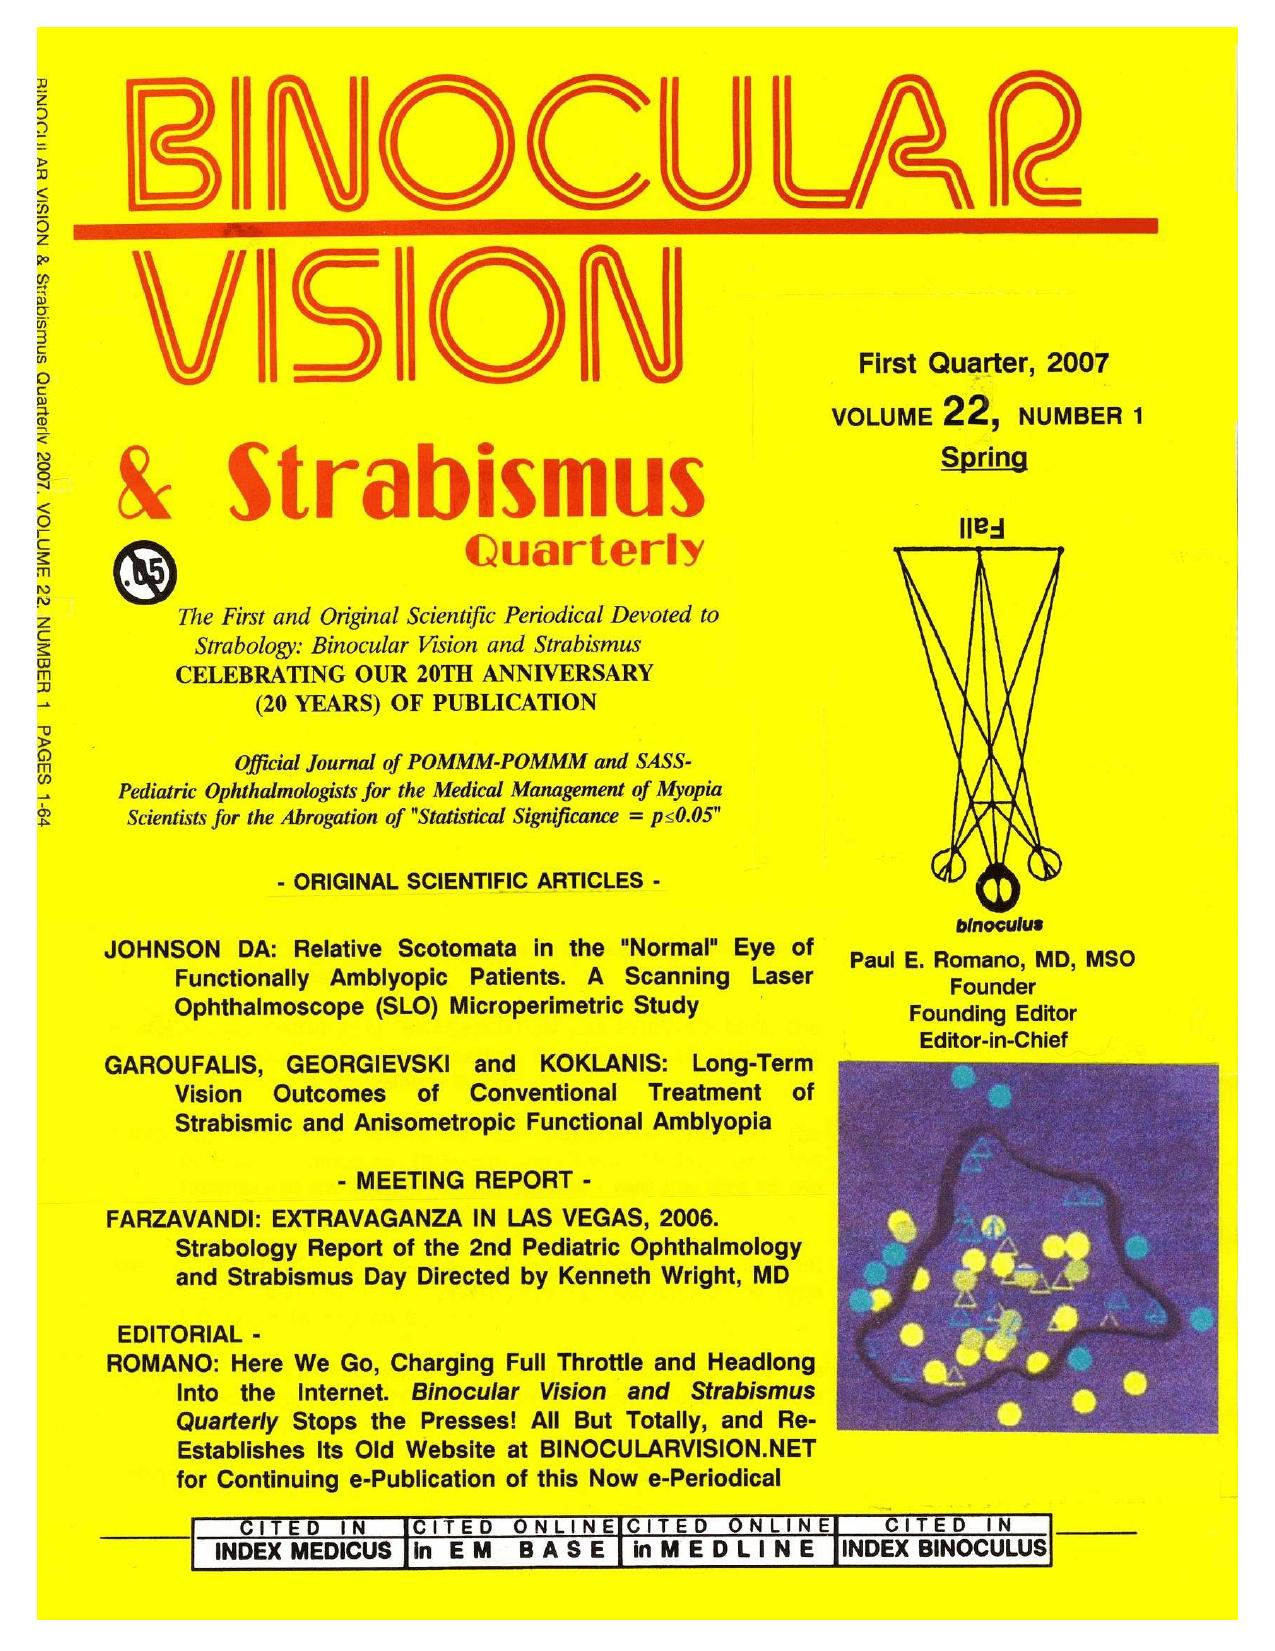 BINOCULAR VISION & STRABISMUS QUARTERLY 2007